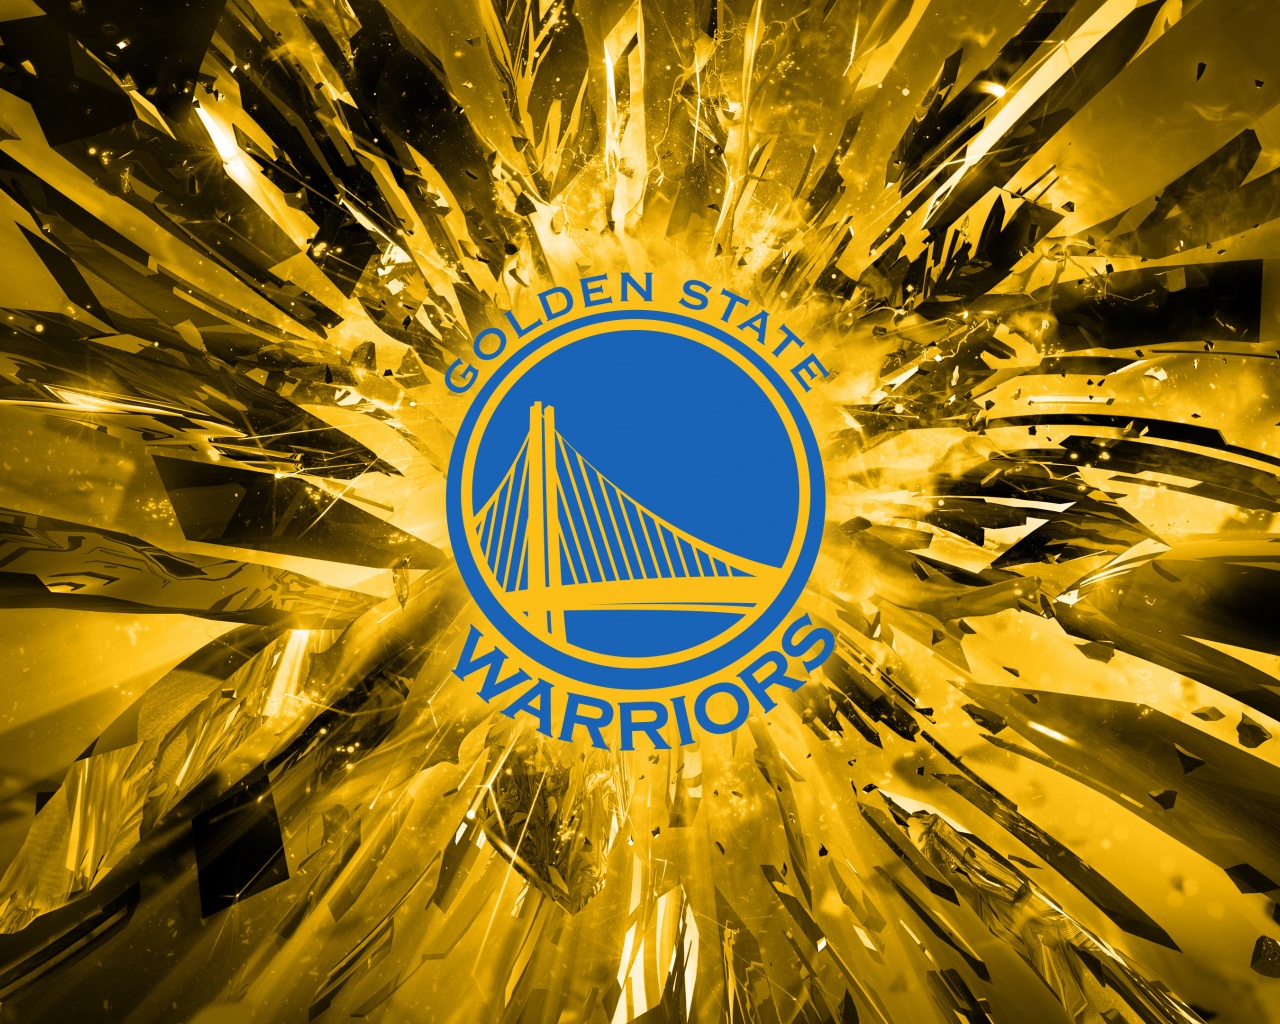 Golden State Warriors 2015 Logo